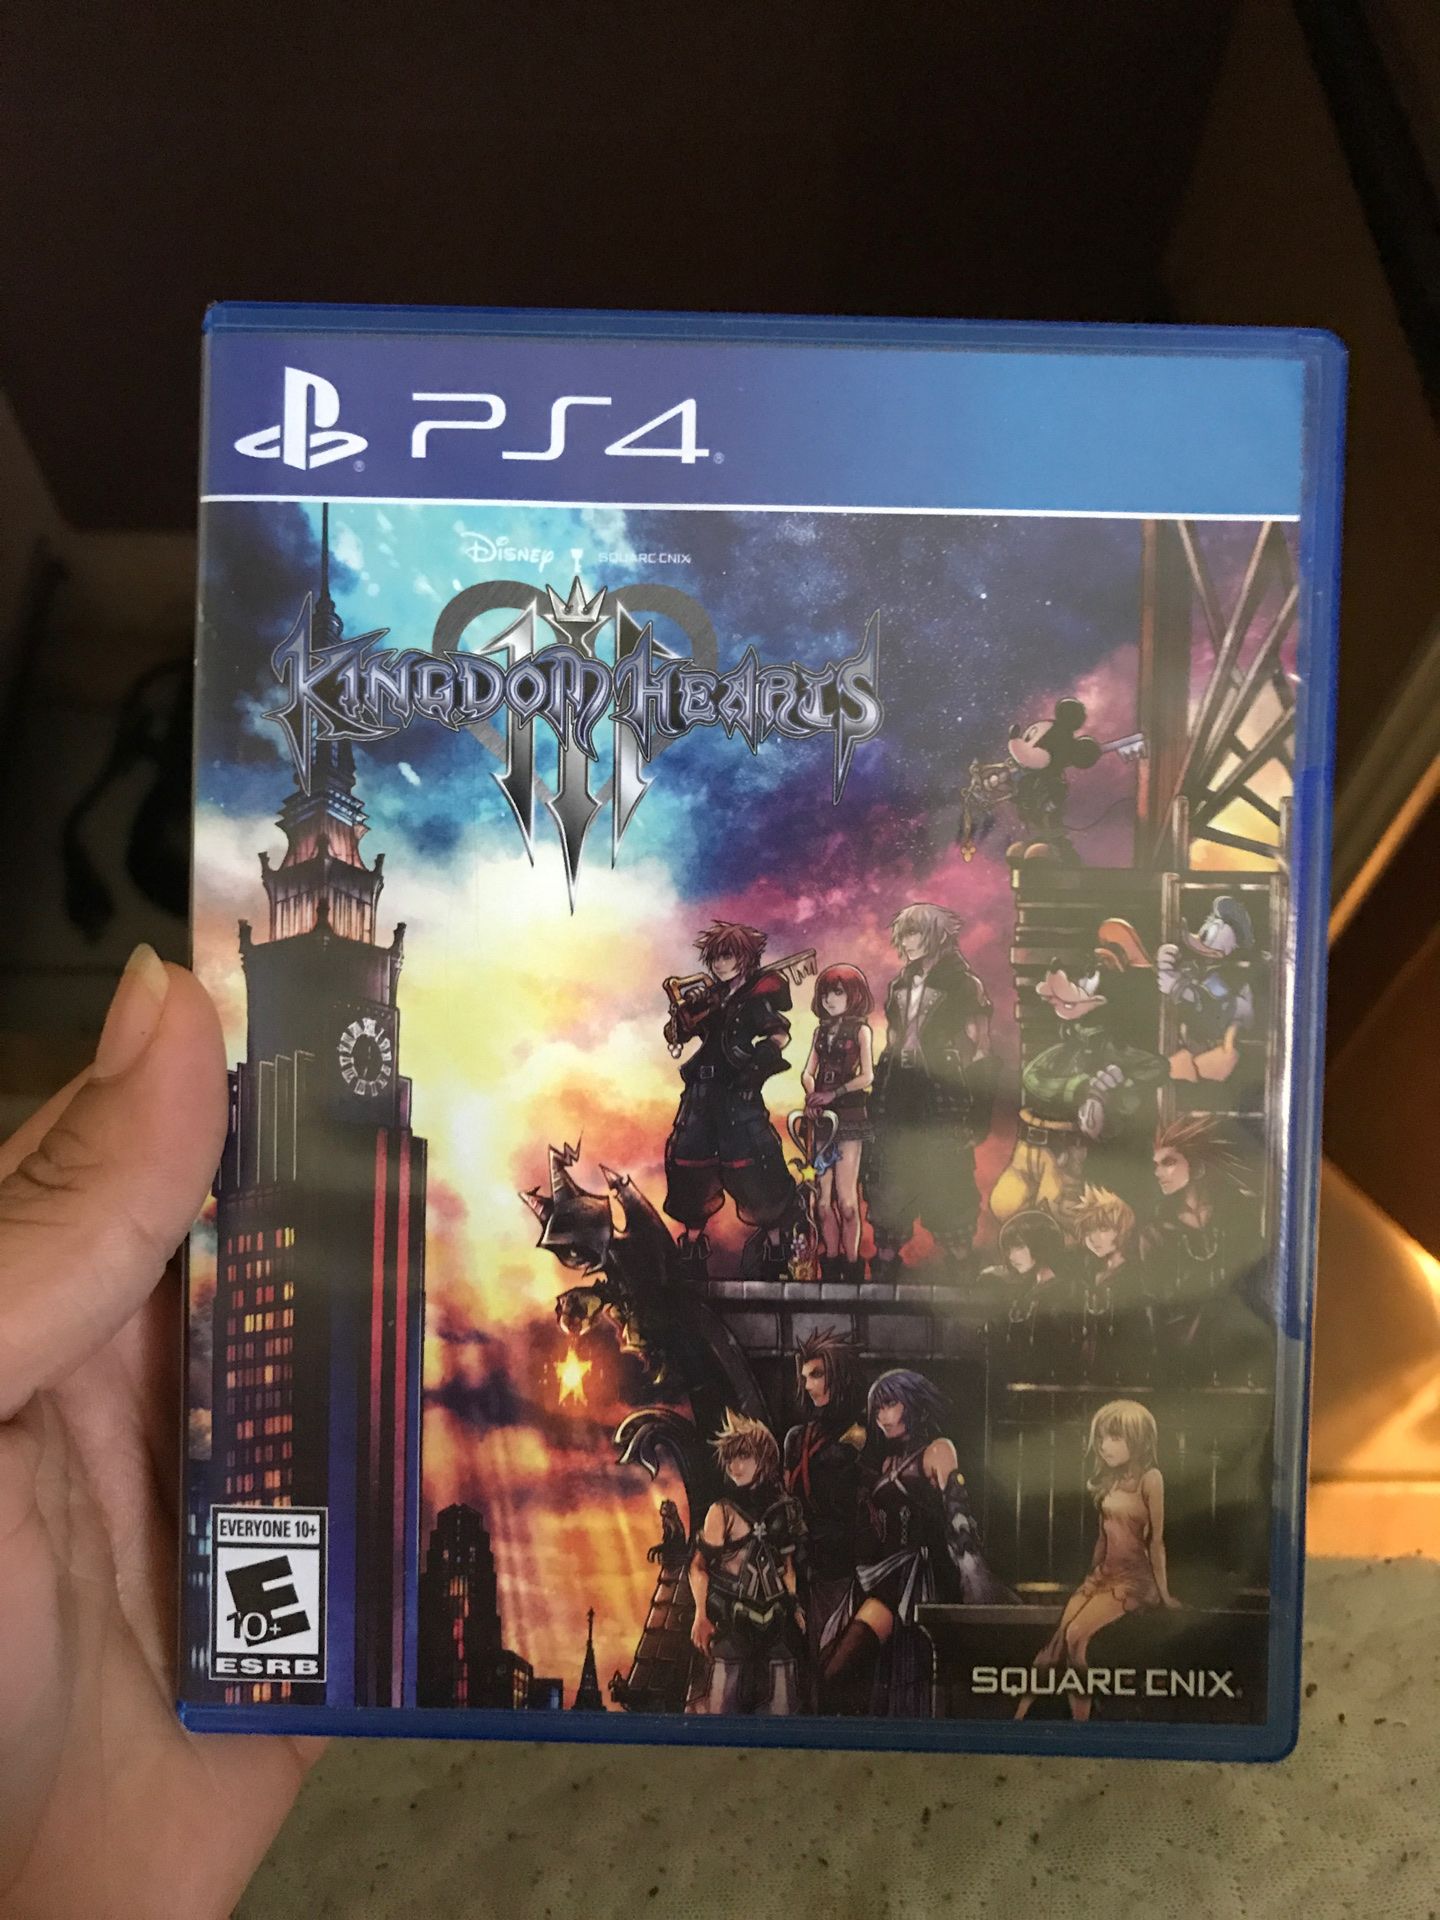 Kingdom Hearts 3, For PS4